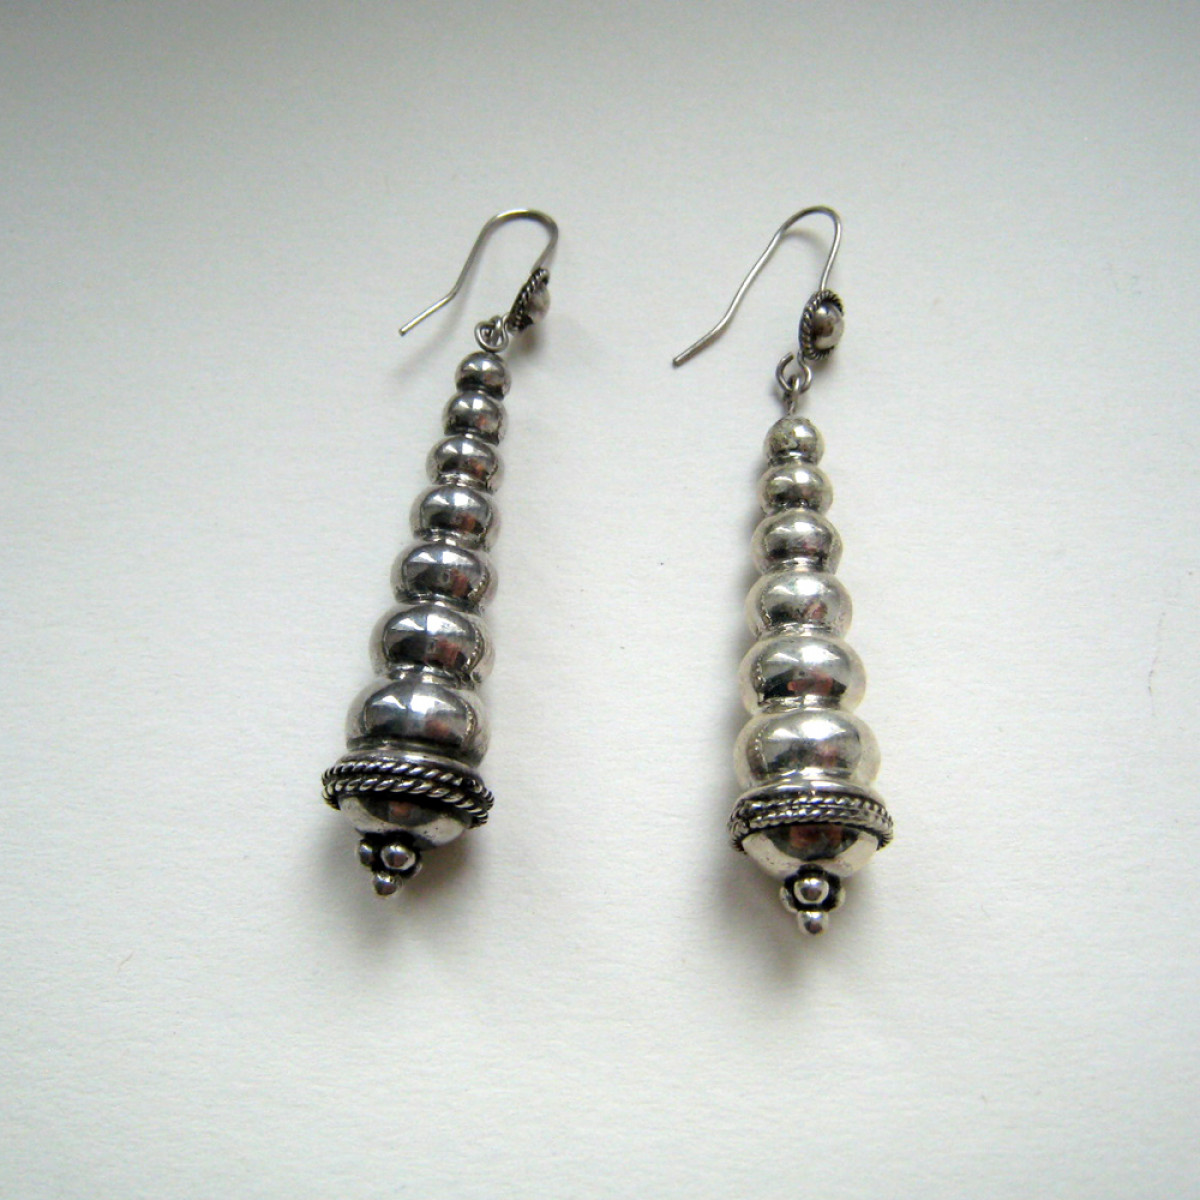 Earrings - hanging silver cone